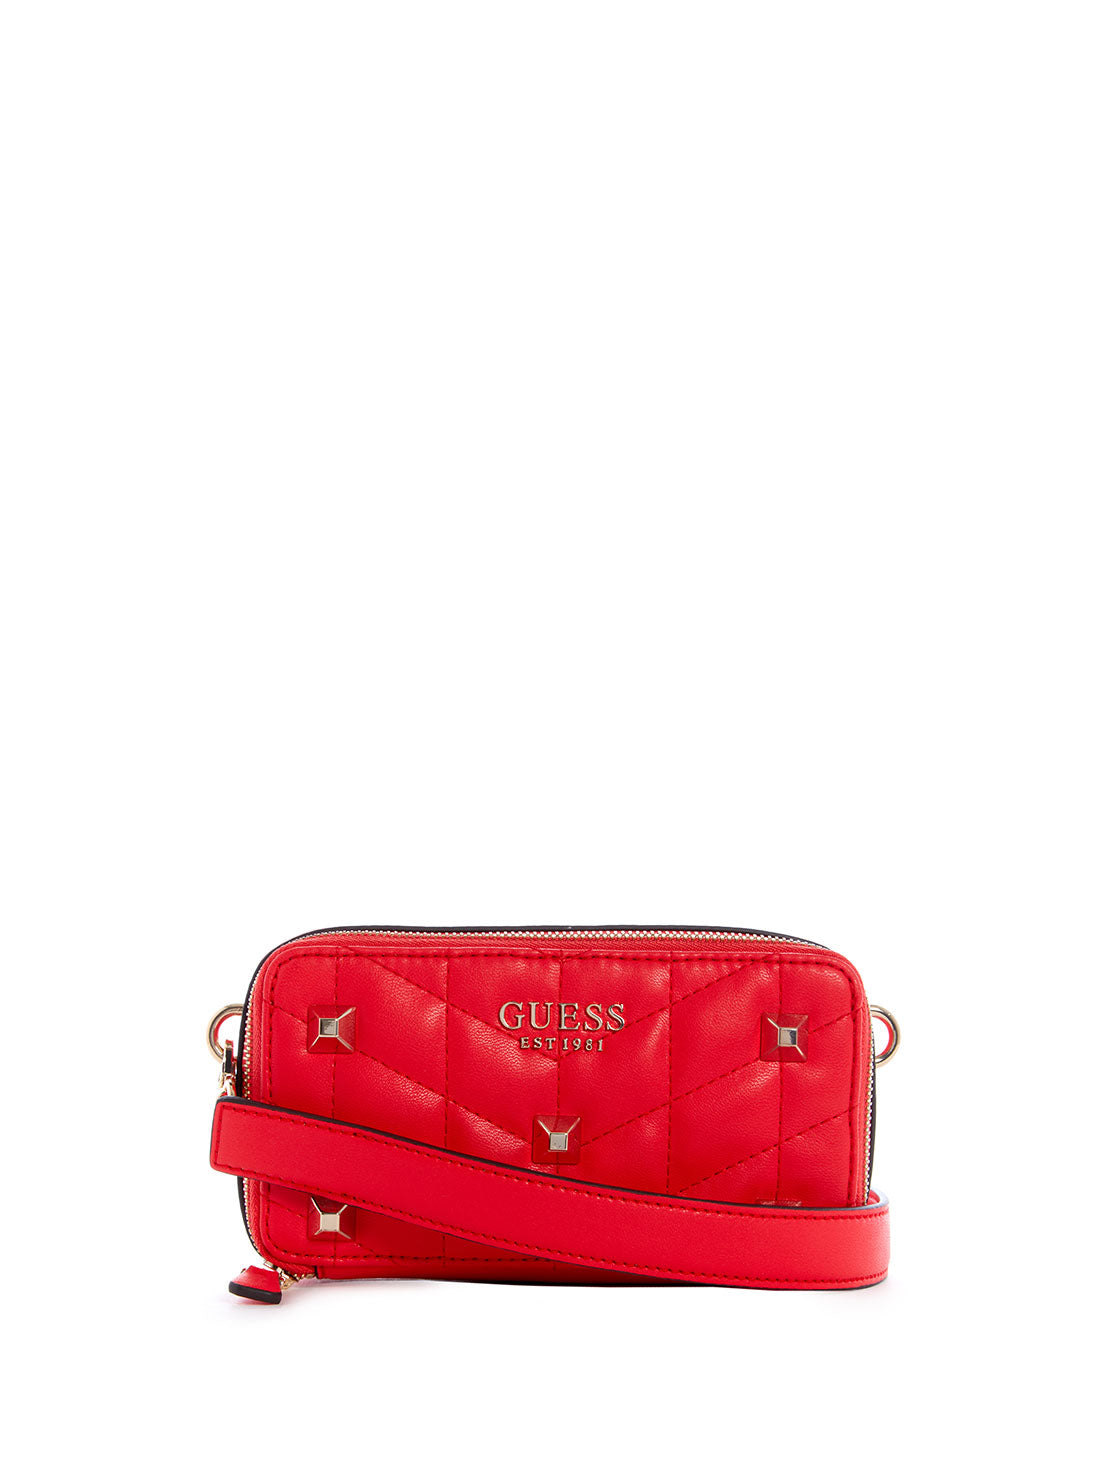 GUESS Women's Red Brera Studded Mini Crossbody Camera Bag QG840472 Front View